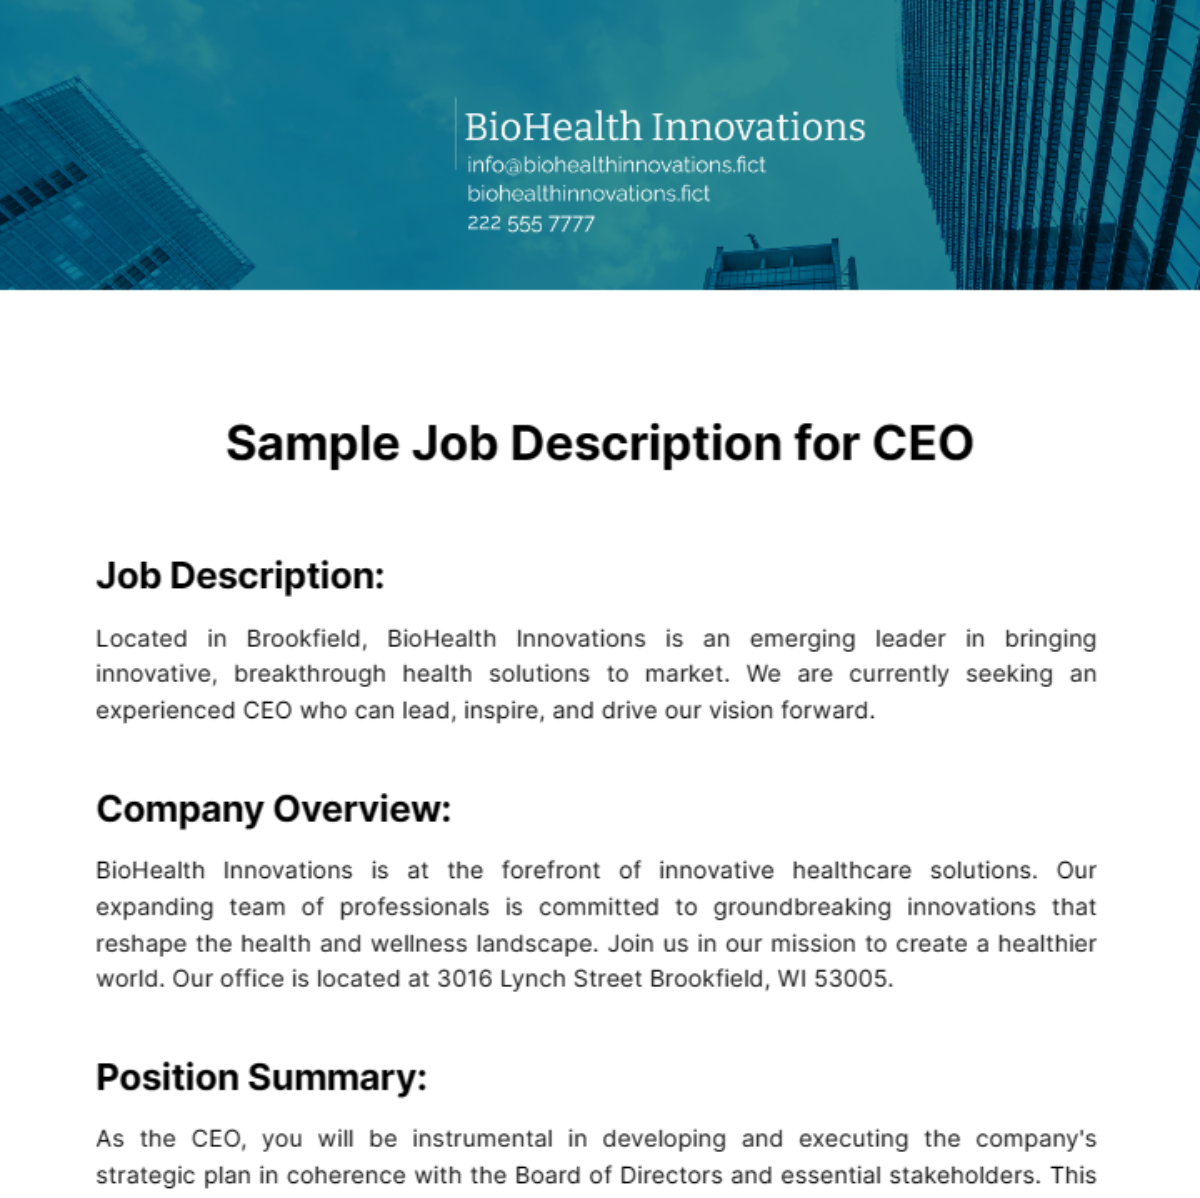 Sample Job Description for CEO Template